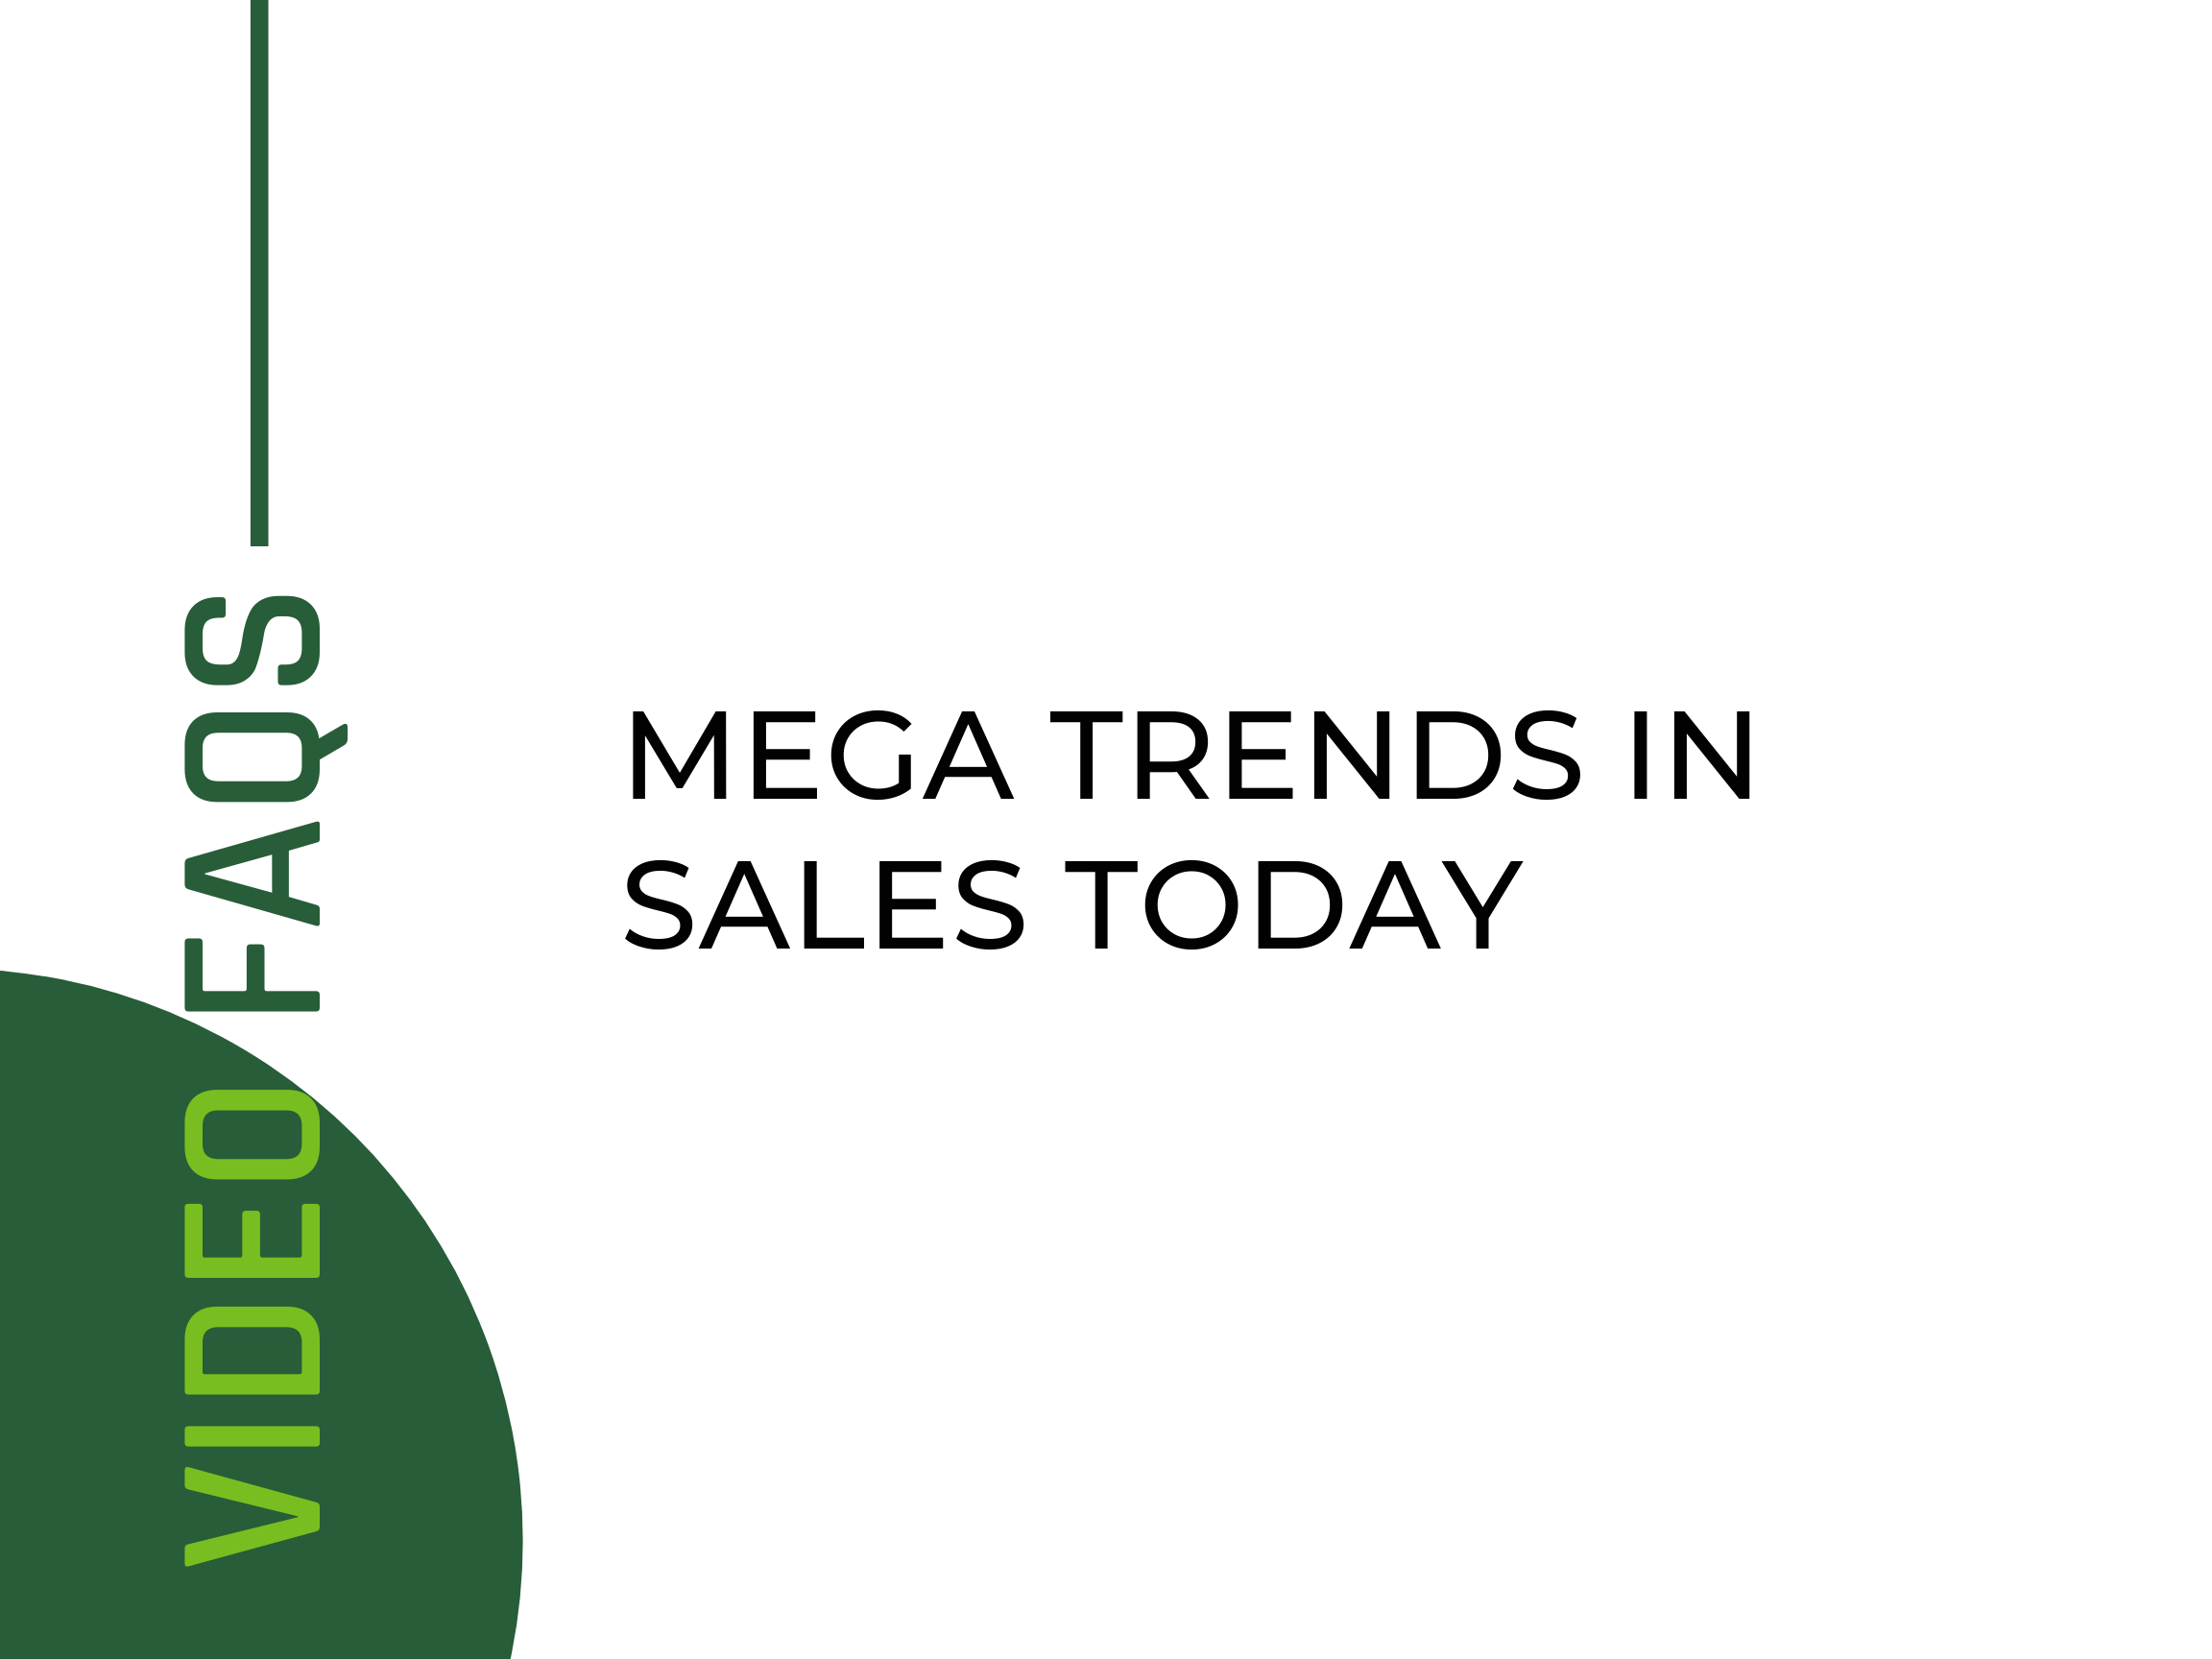 Mega trends in sales today